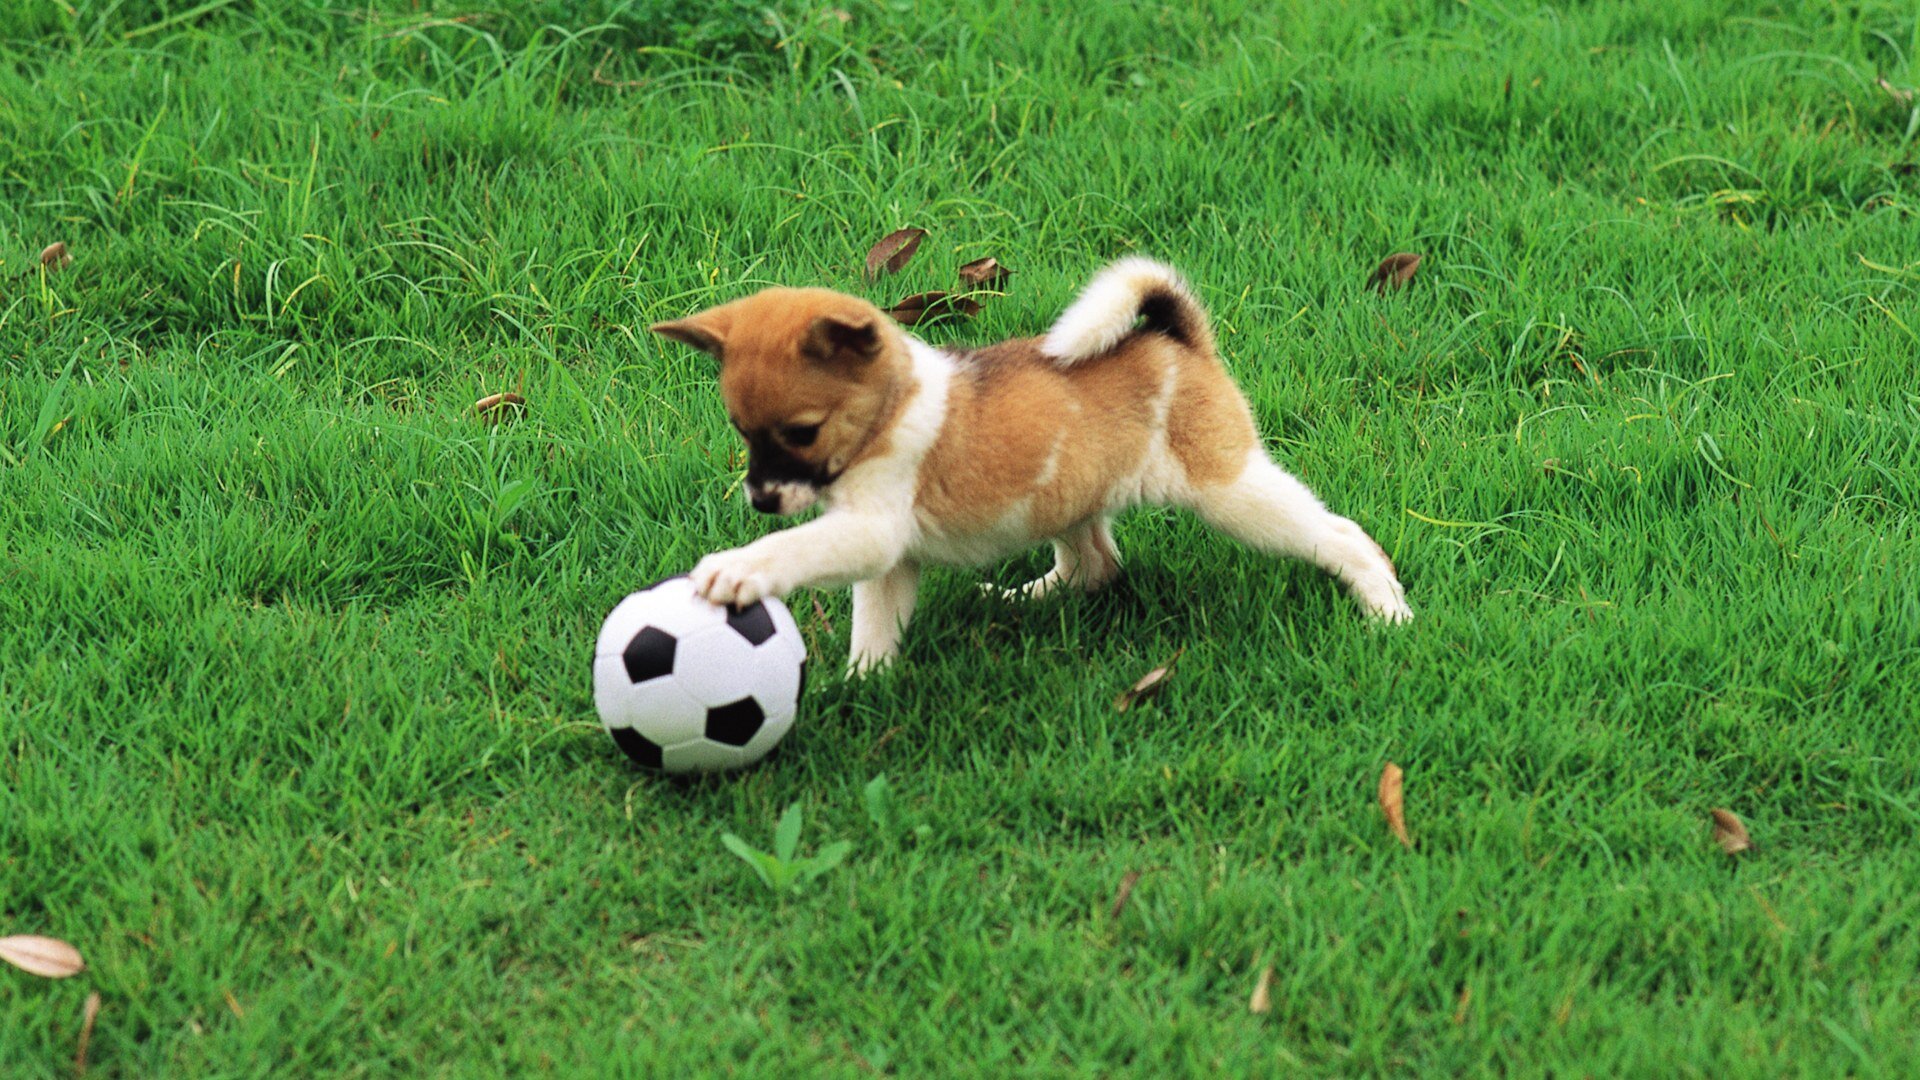 çimlerde topla oynayan yavru köpek